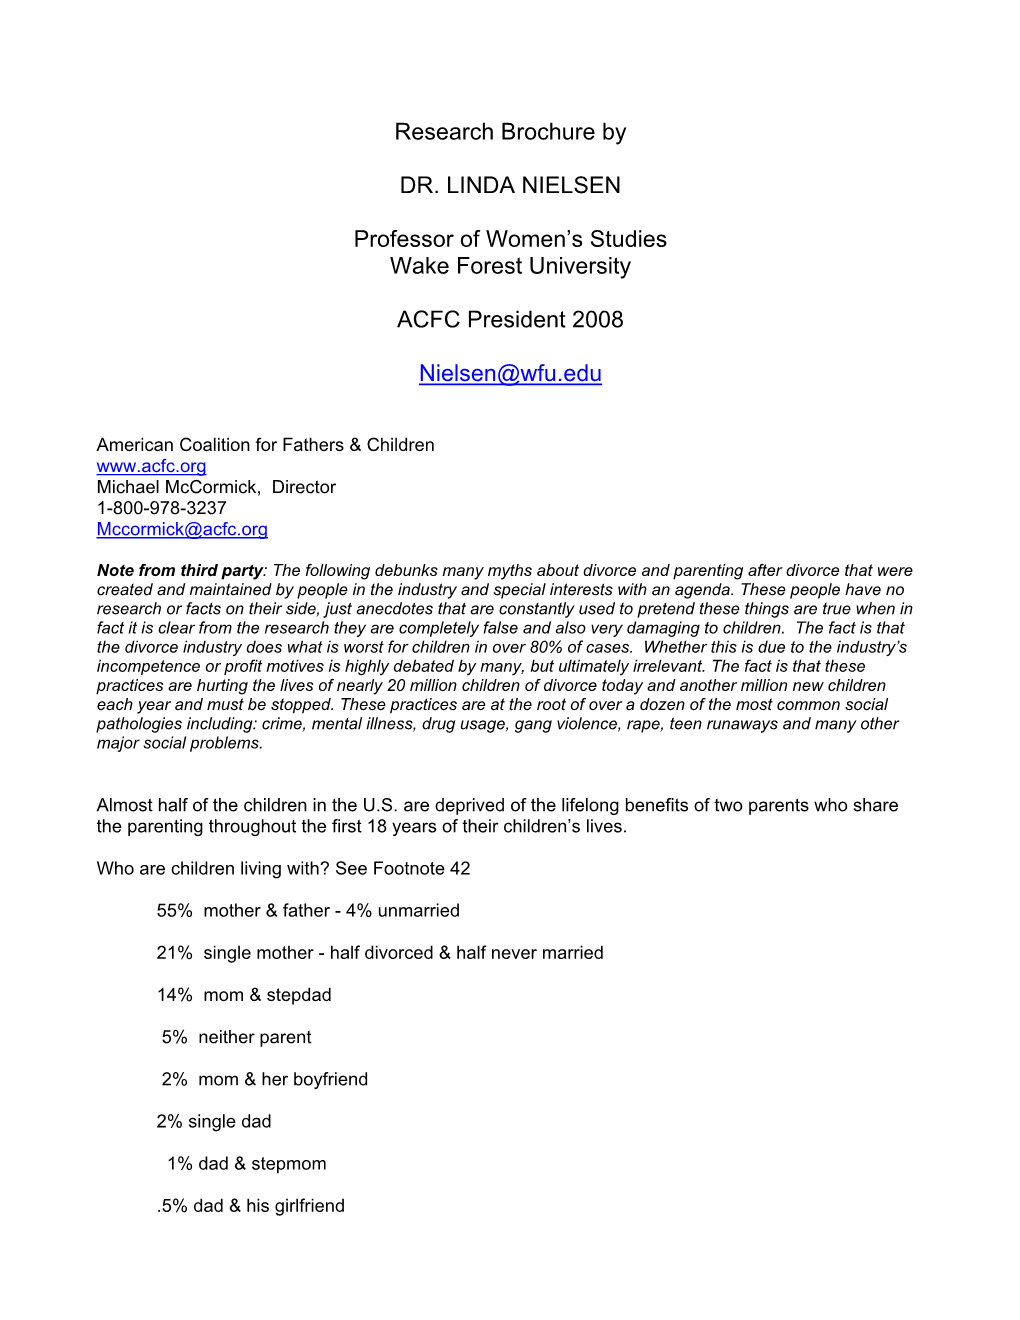 Research Brochure by DR. LINDA NIELSEN Professor of Women's